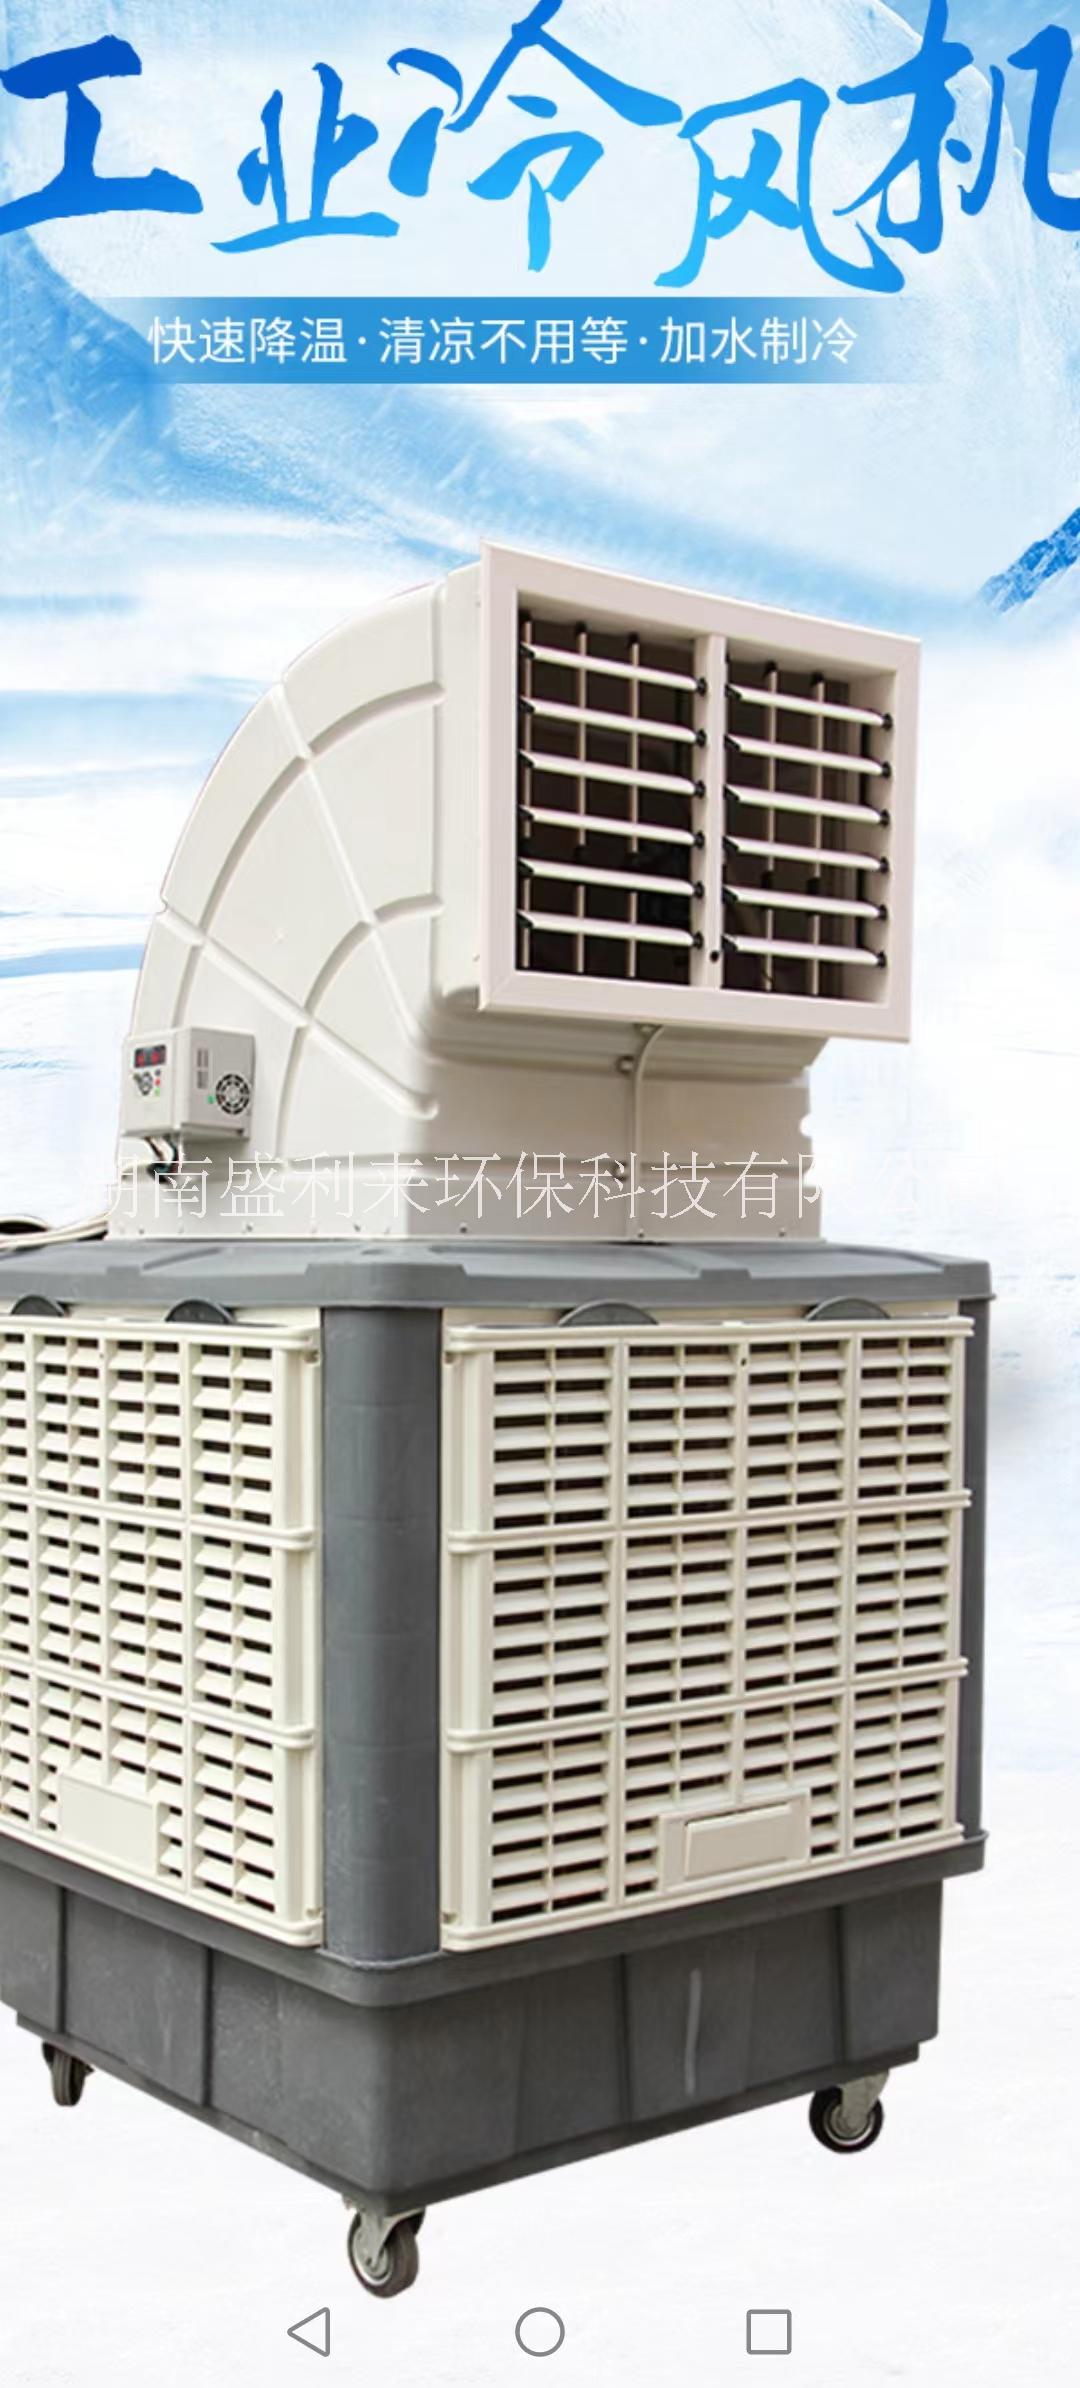 SLL-18环保空调/蒸发式水冷空调  SLL-30环保空调/蒸发式水冷空调